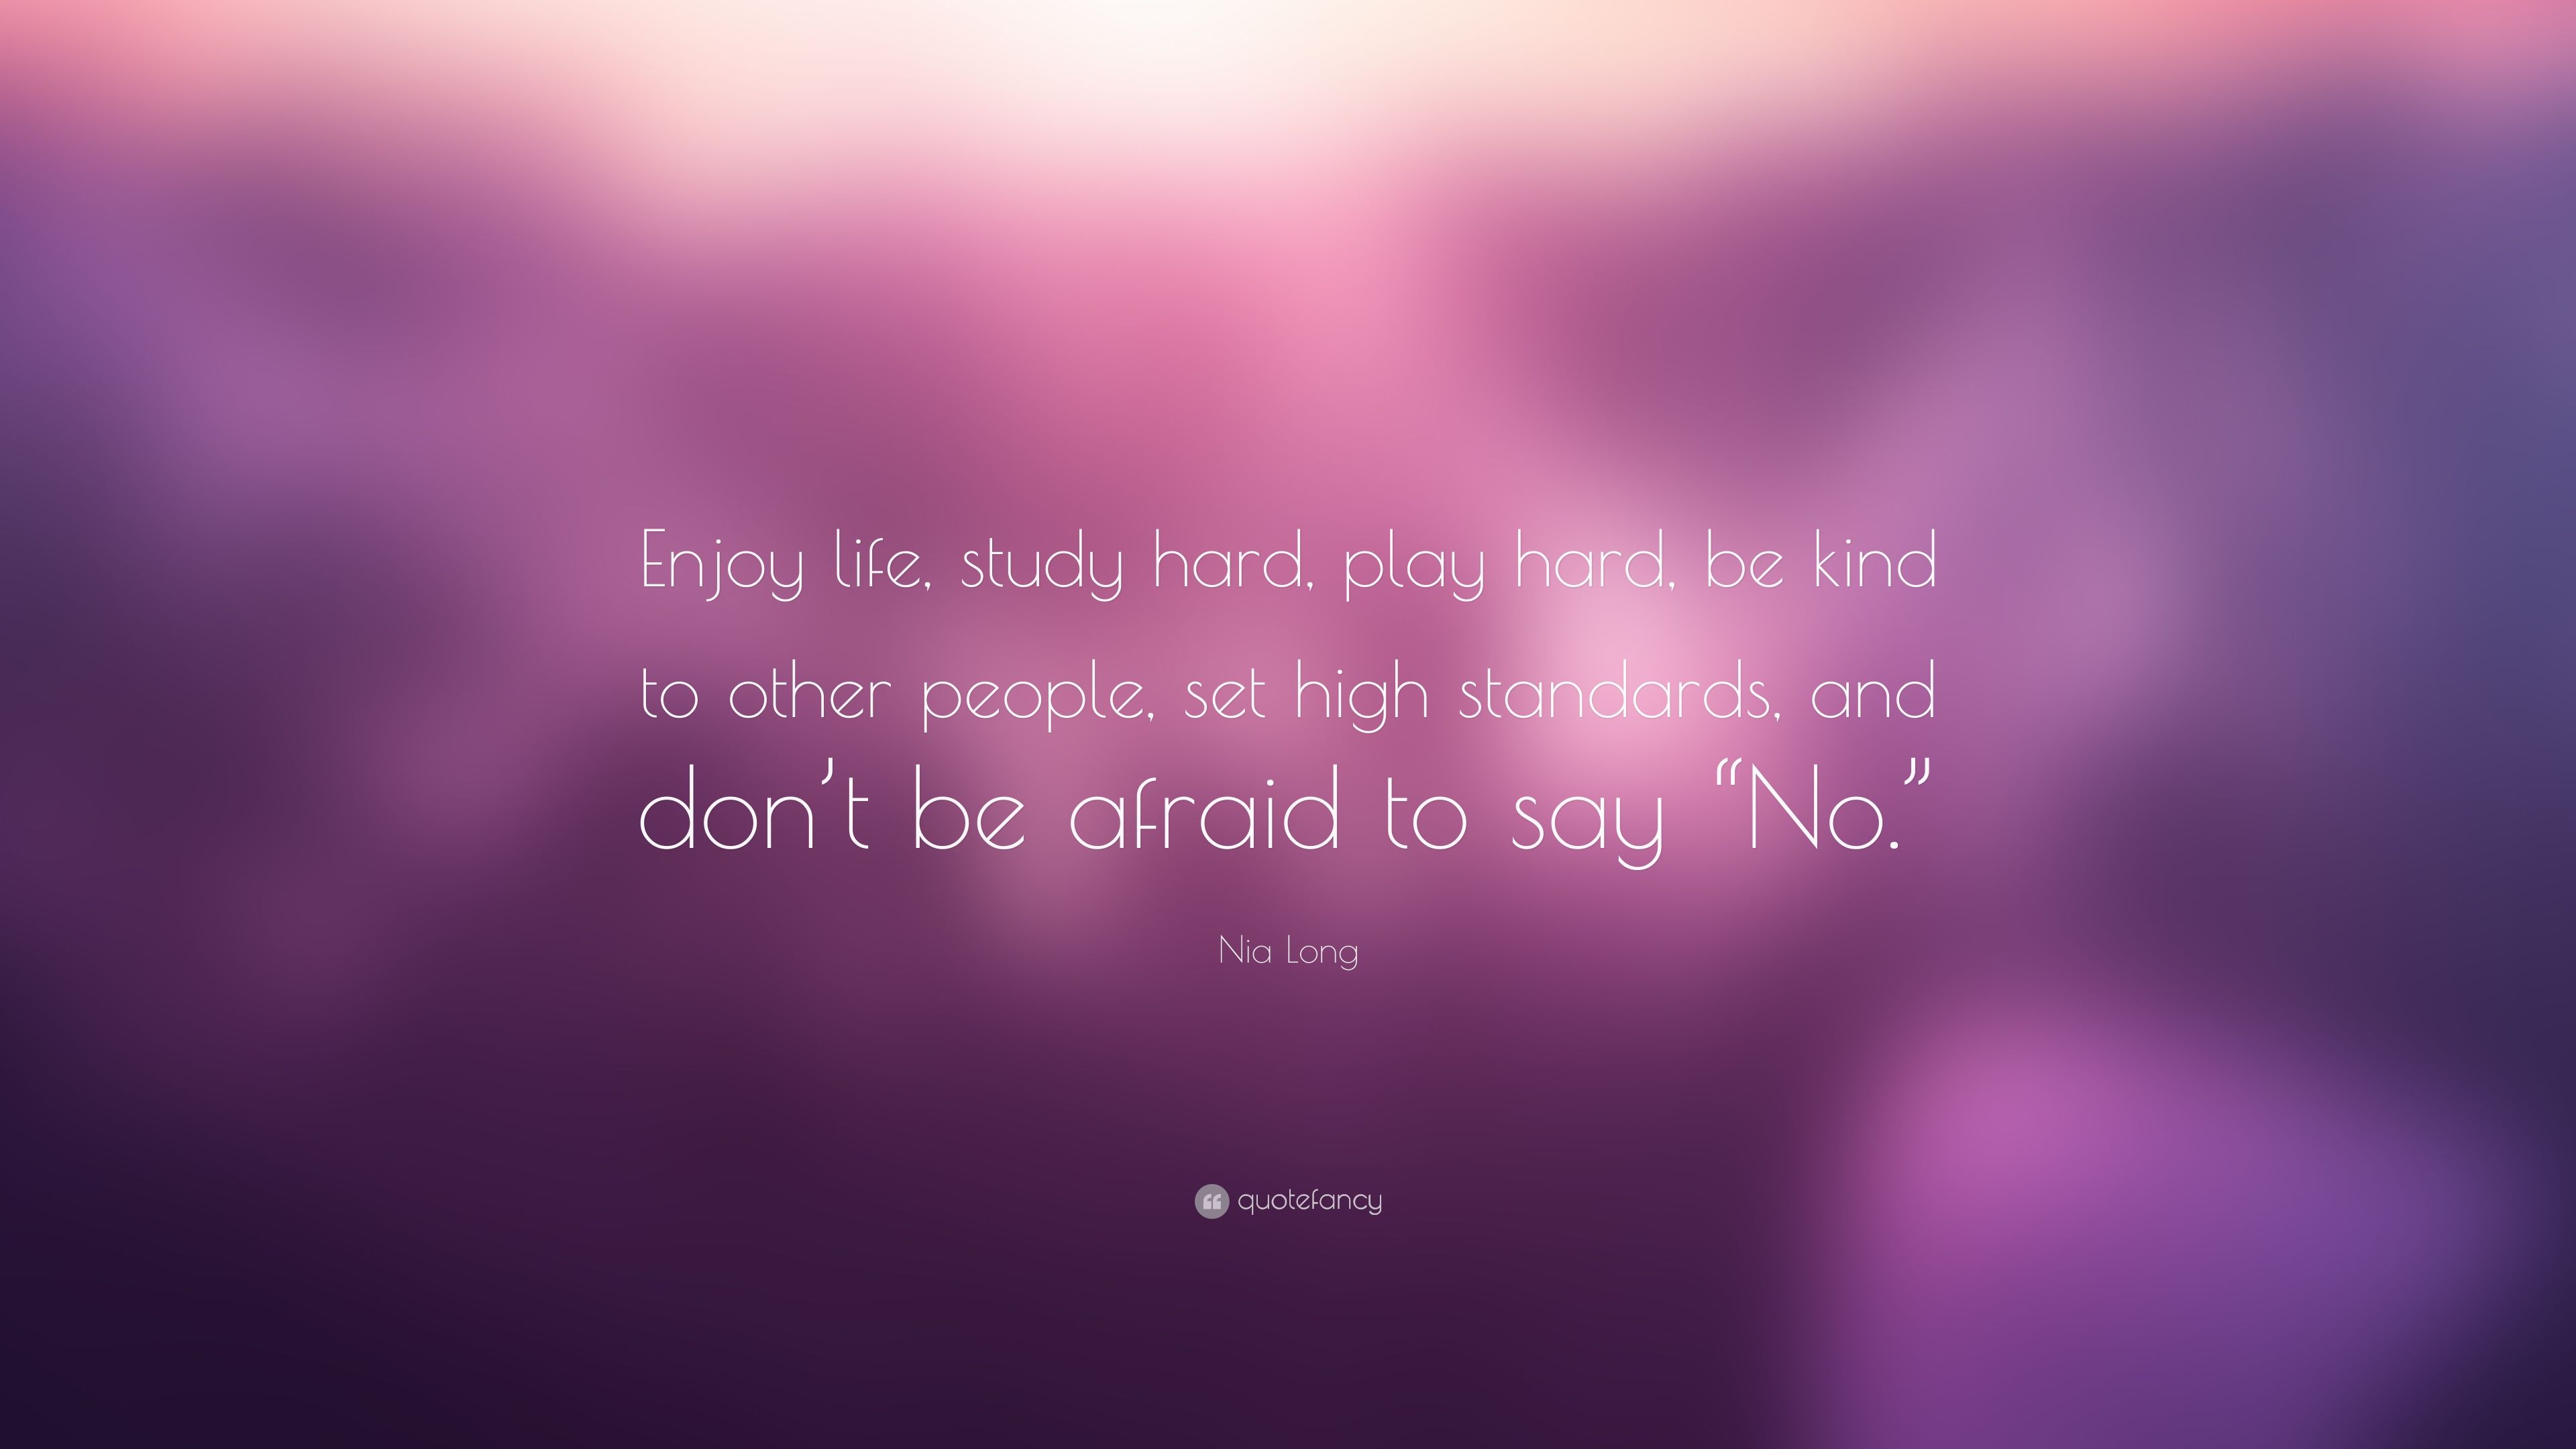 Nia Long Quote: “Enjoy life, study hard, play hard, be kind to